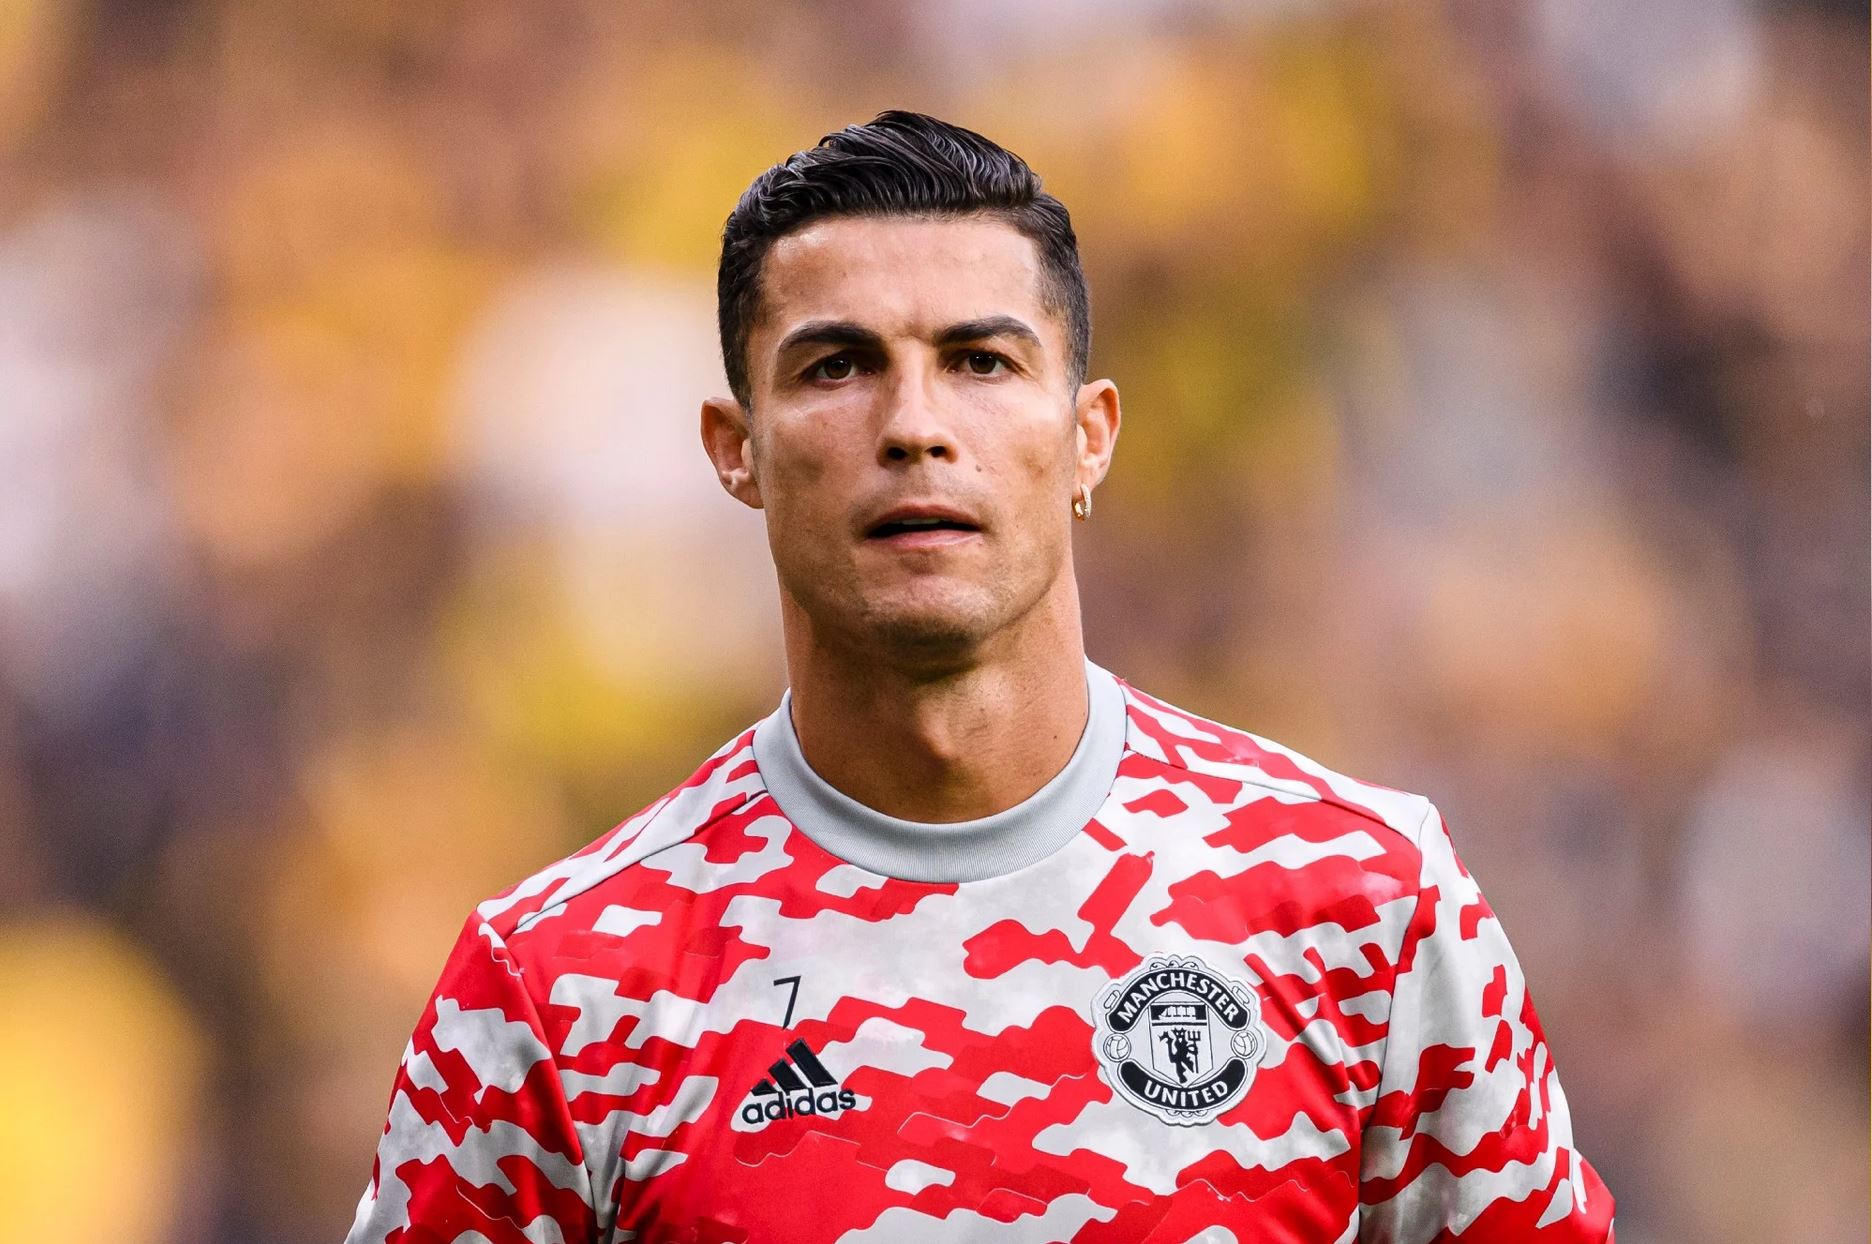 Cristiano Ronaldo @ Eurasia Sports Images/Getty Images